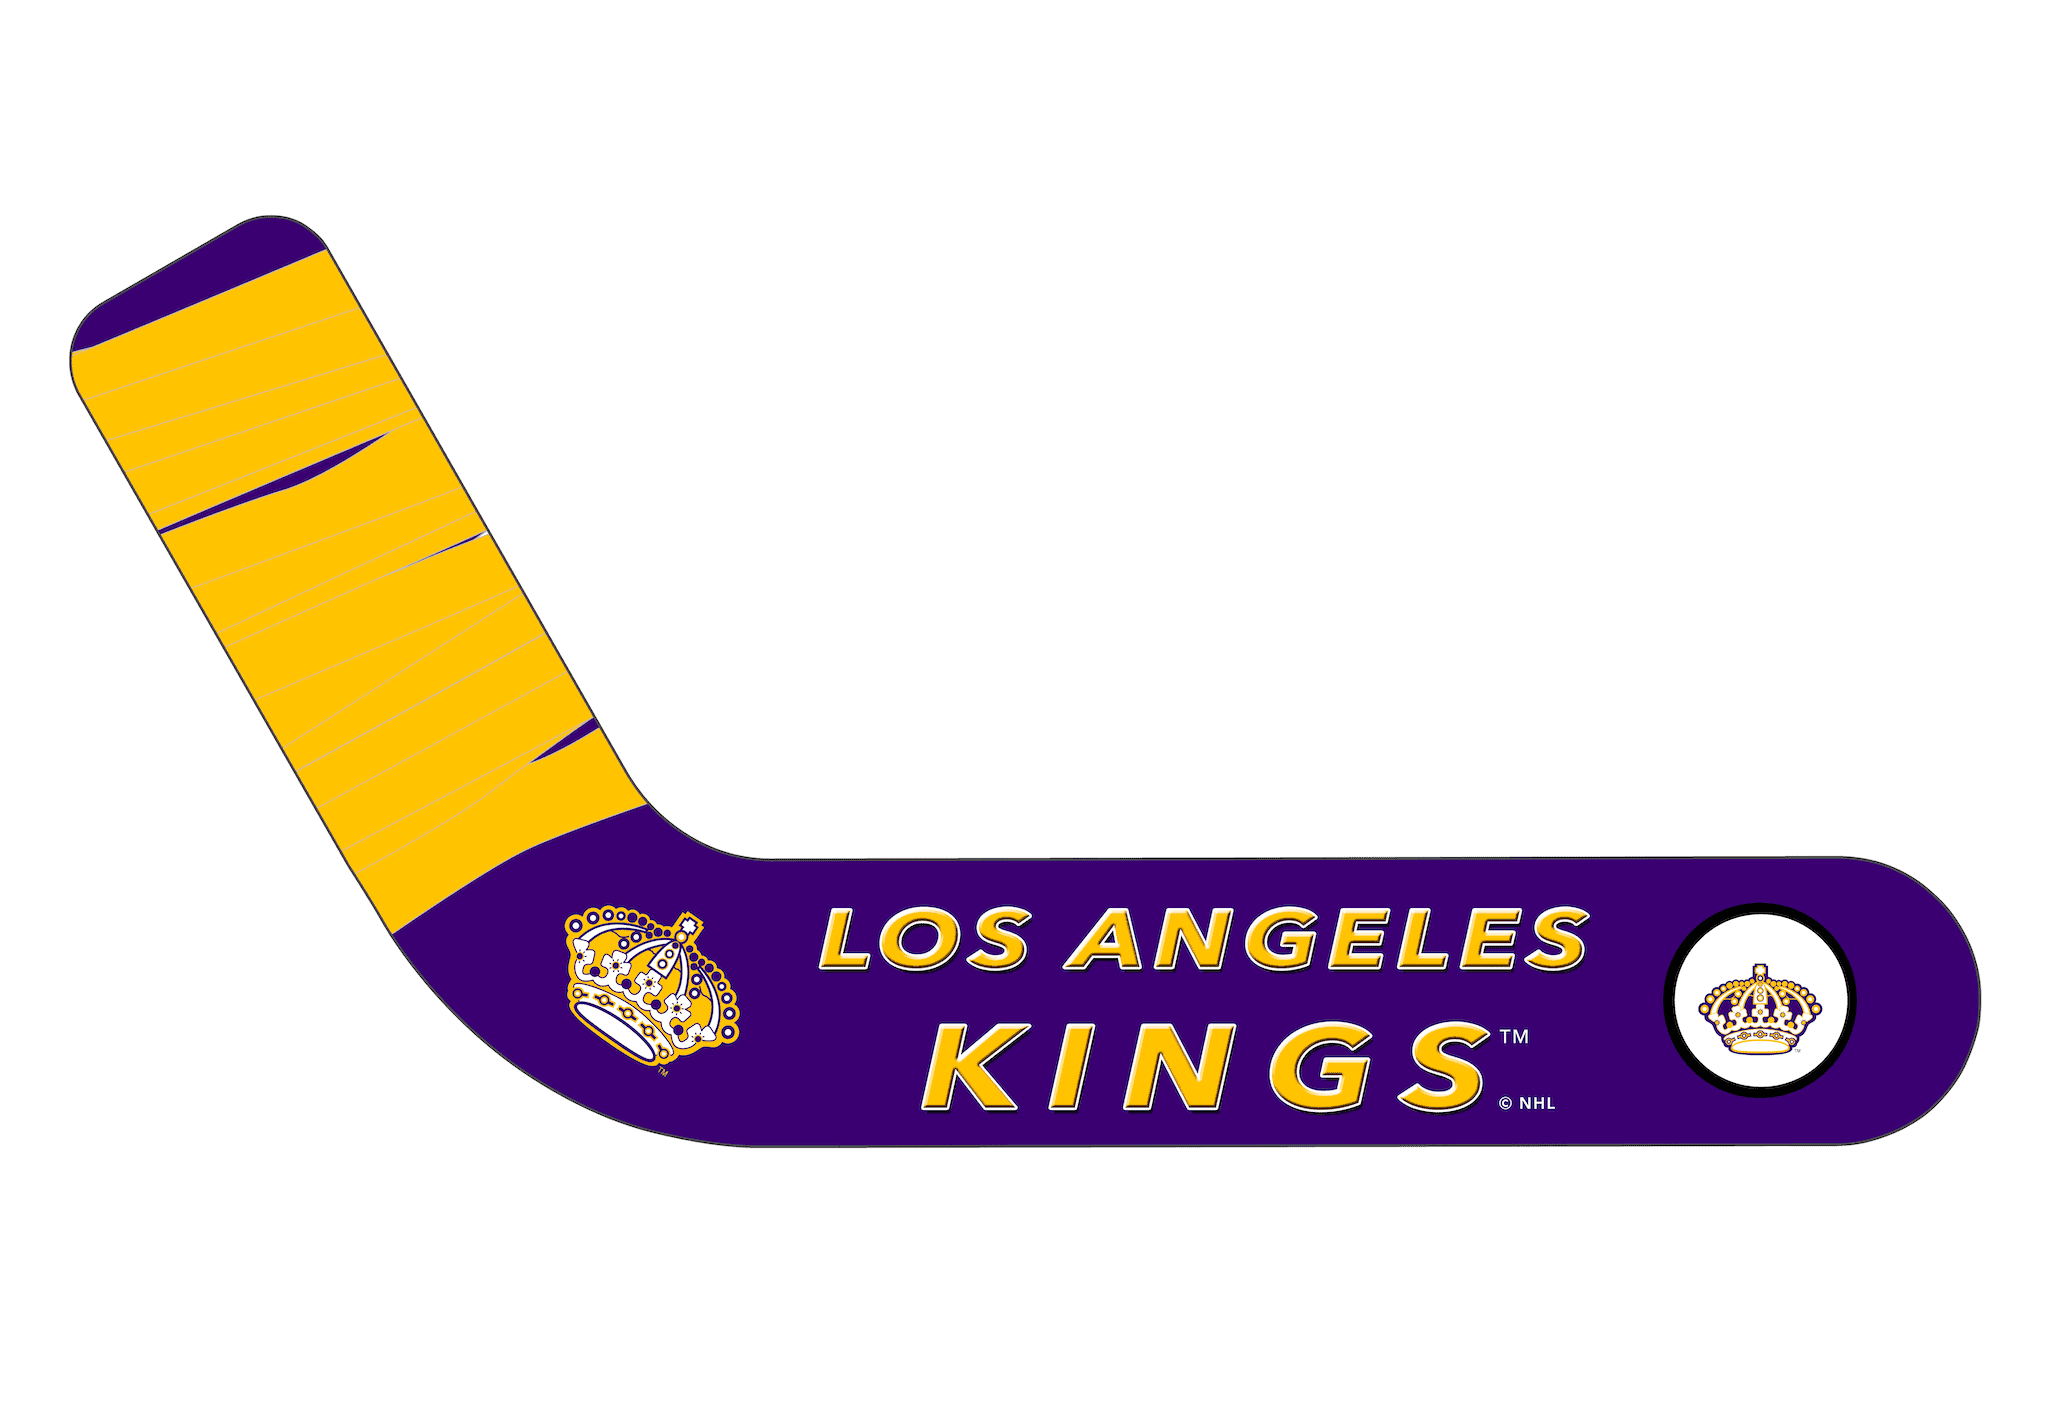 LA Kings ('88) - Reverse Retro Revised : r/losangeleskings